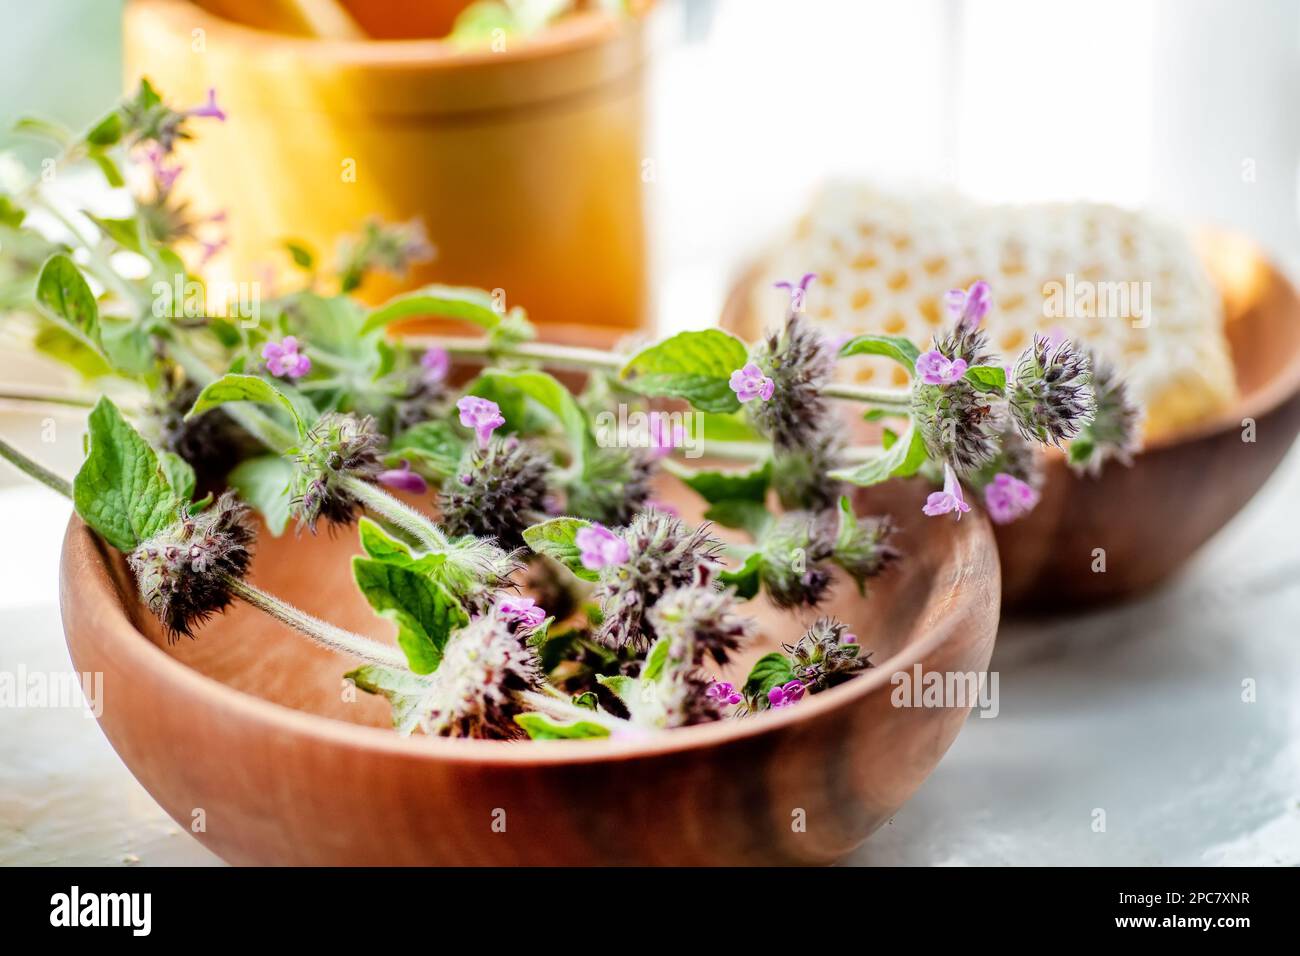 Honey plant Wild basil , Clinopodium vulgare or Satureja vulgaris next to honeycomb honey on a wooden plate near the window Stock Photo